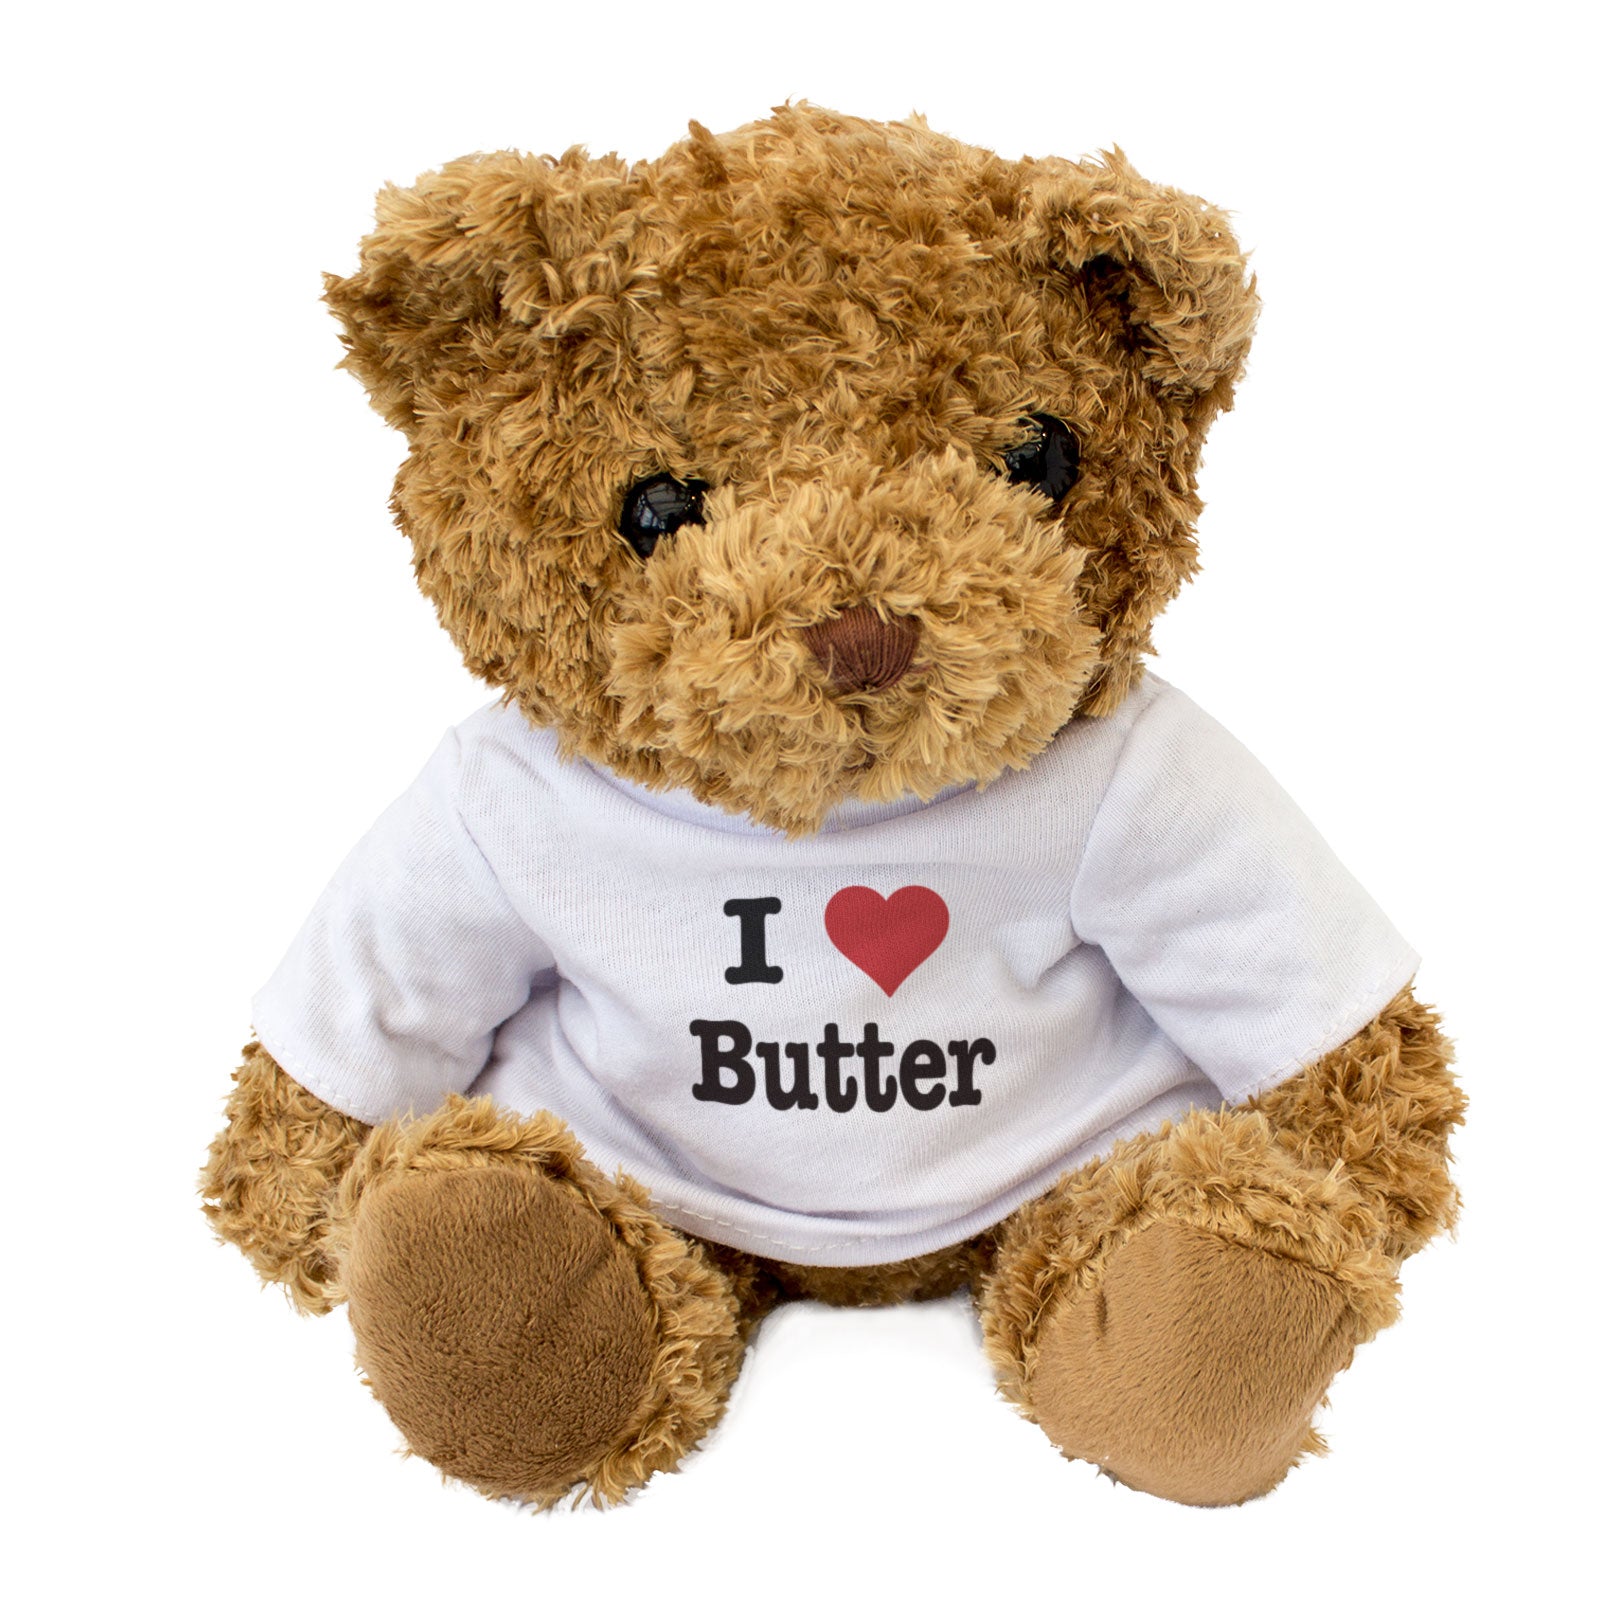 I Love Butter - Teddy Bear